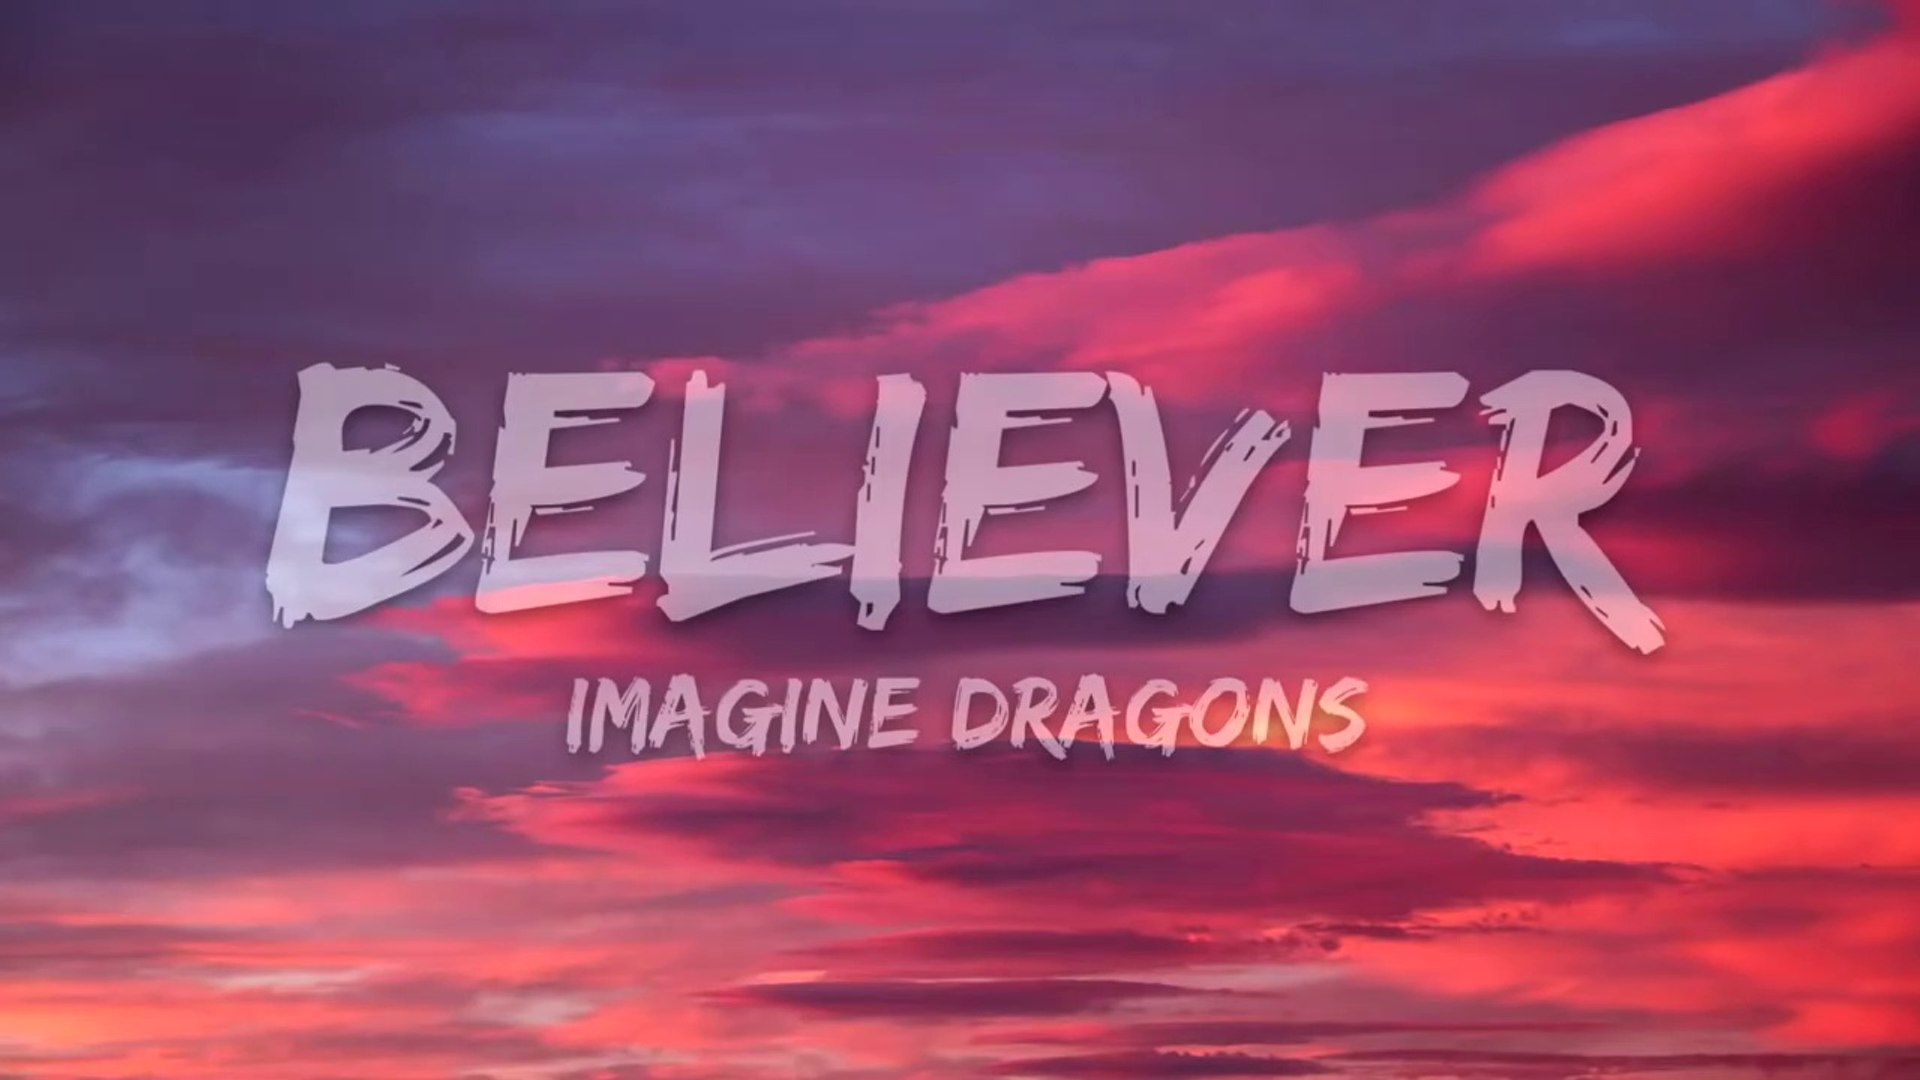 Imagine Dragons - Believer (Lyrics) - video Dailymotion